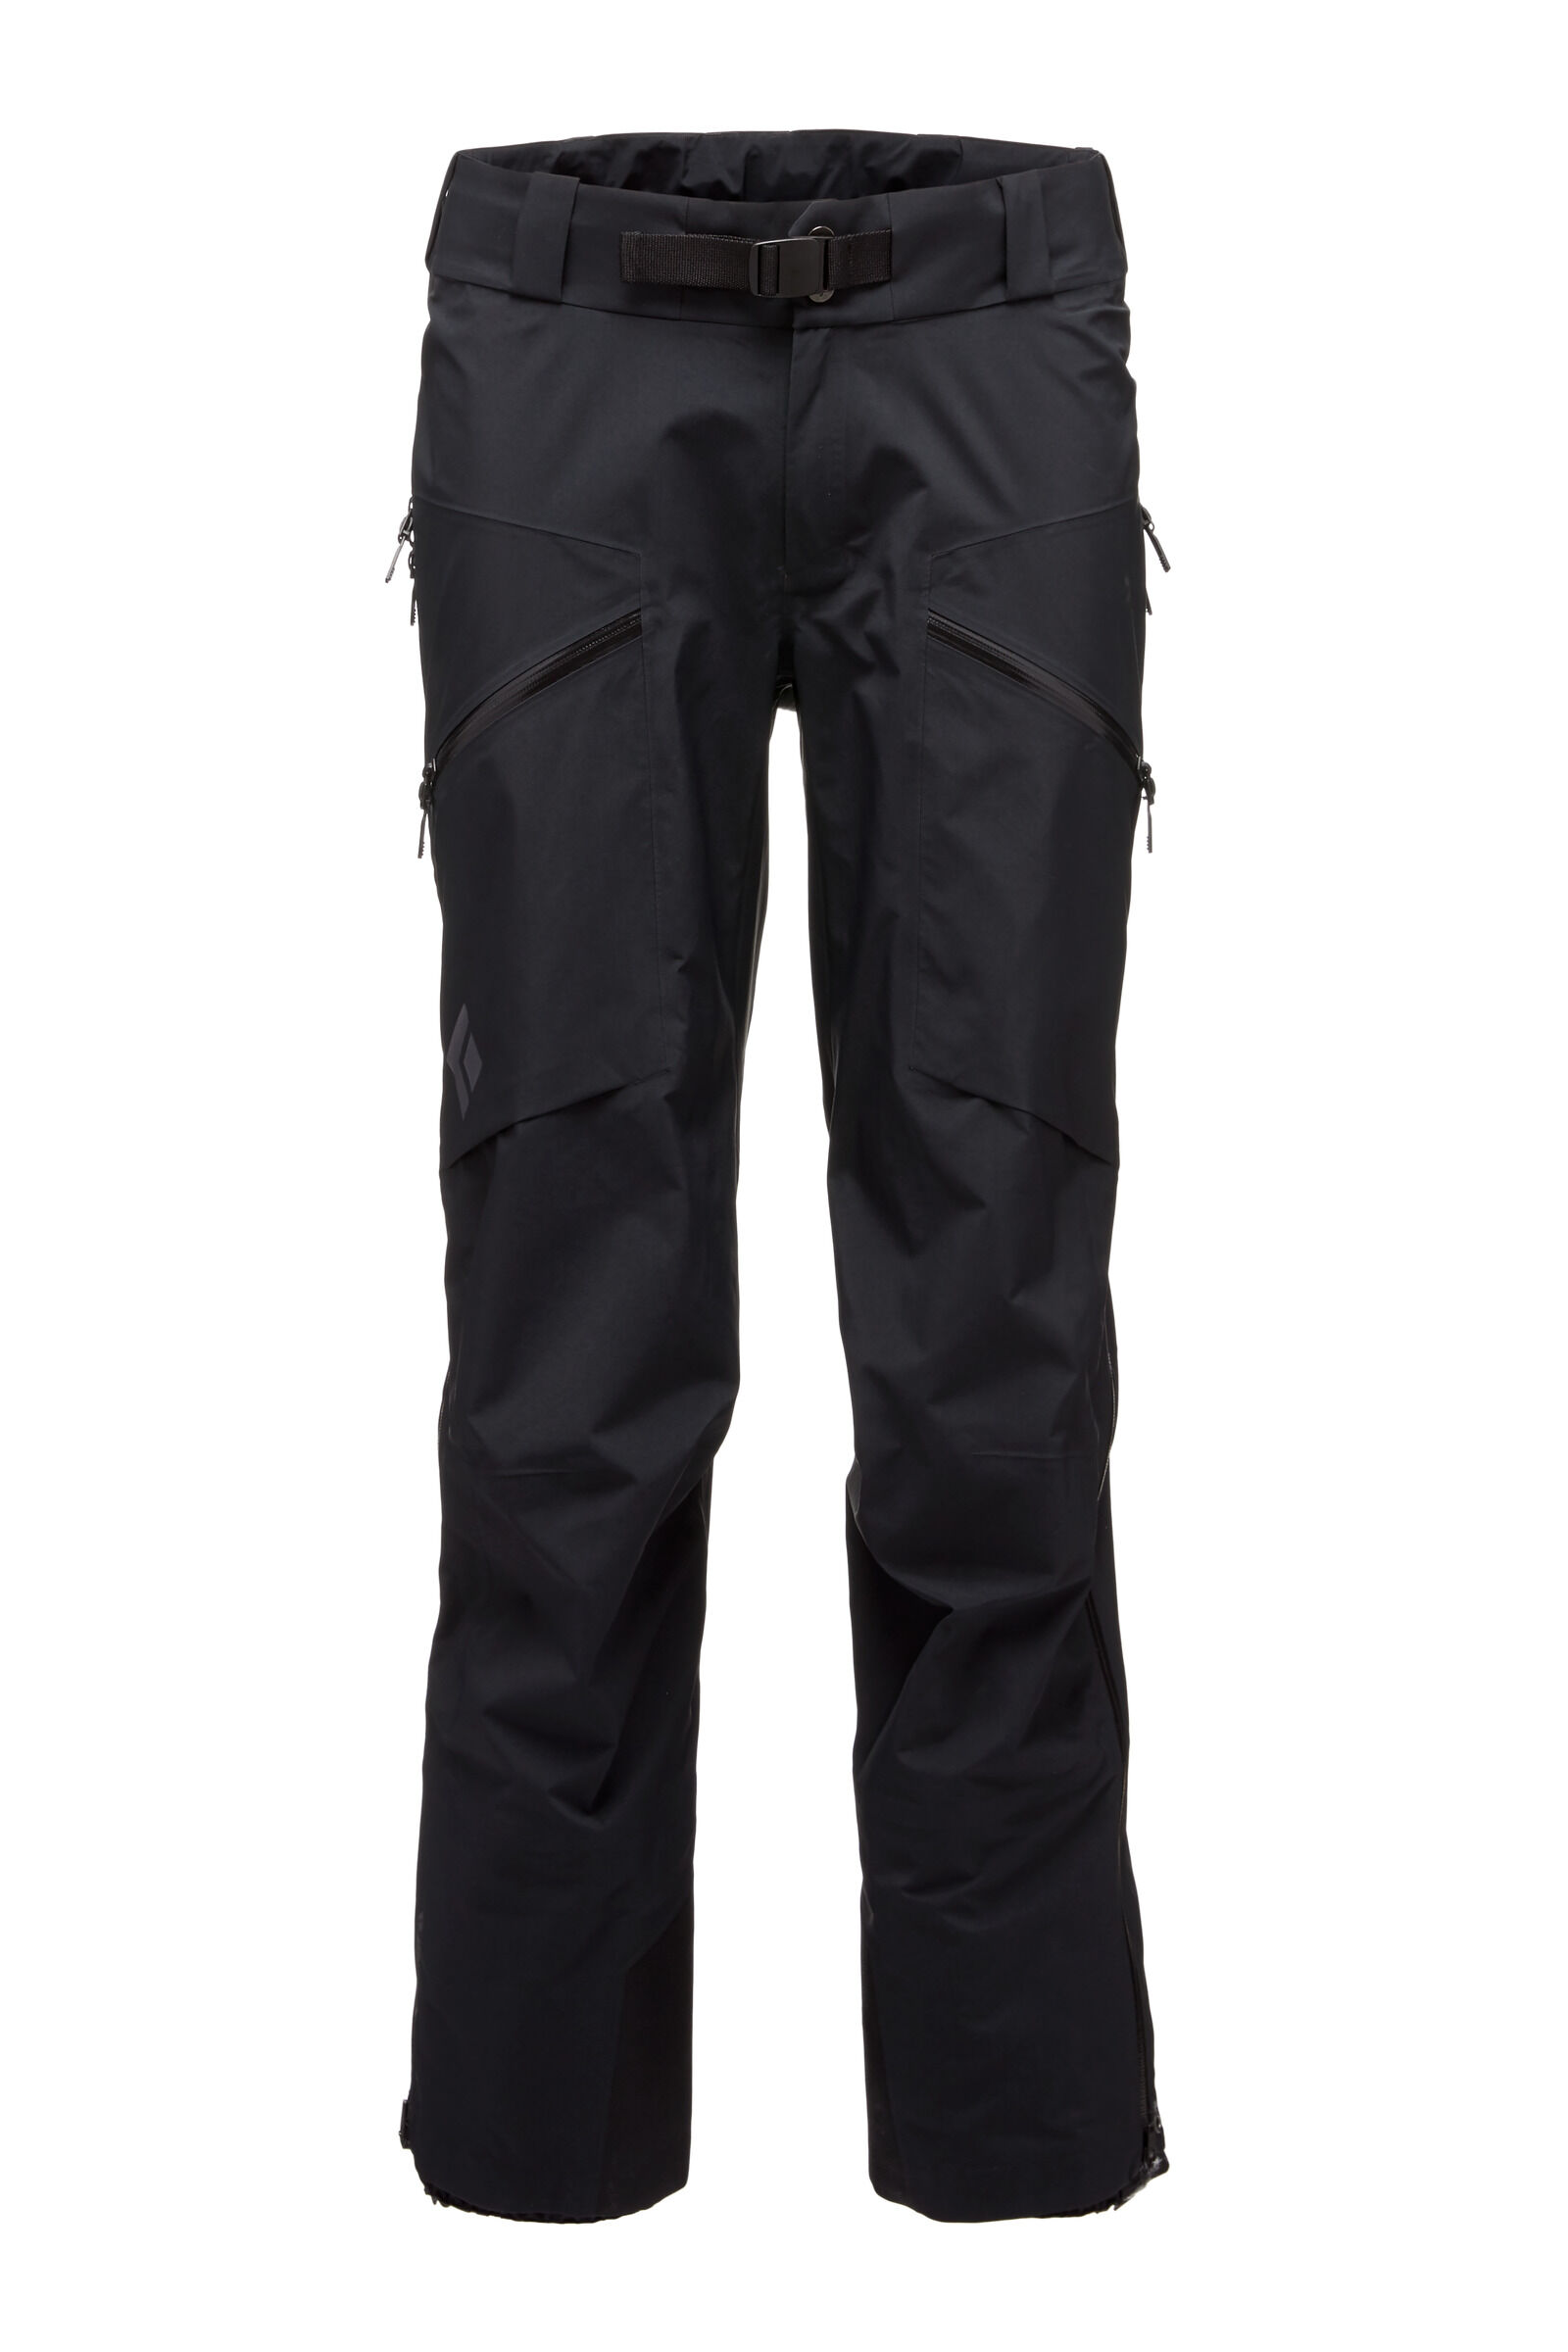 Black Diamond - Sharp End Shell Pants - Pantalón impermeable - Hombre